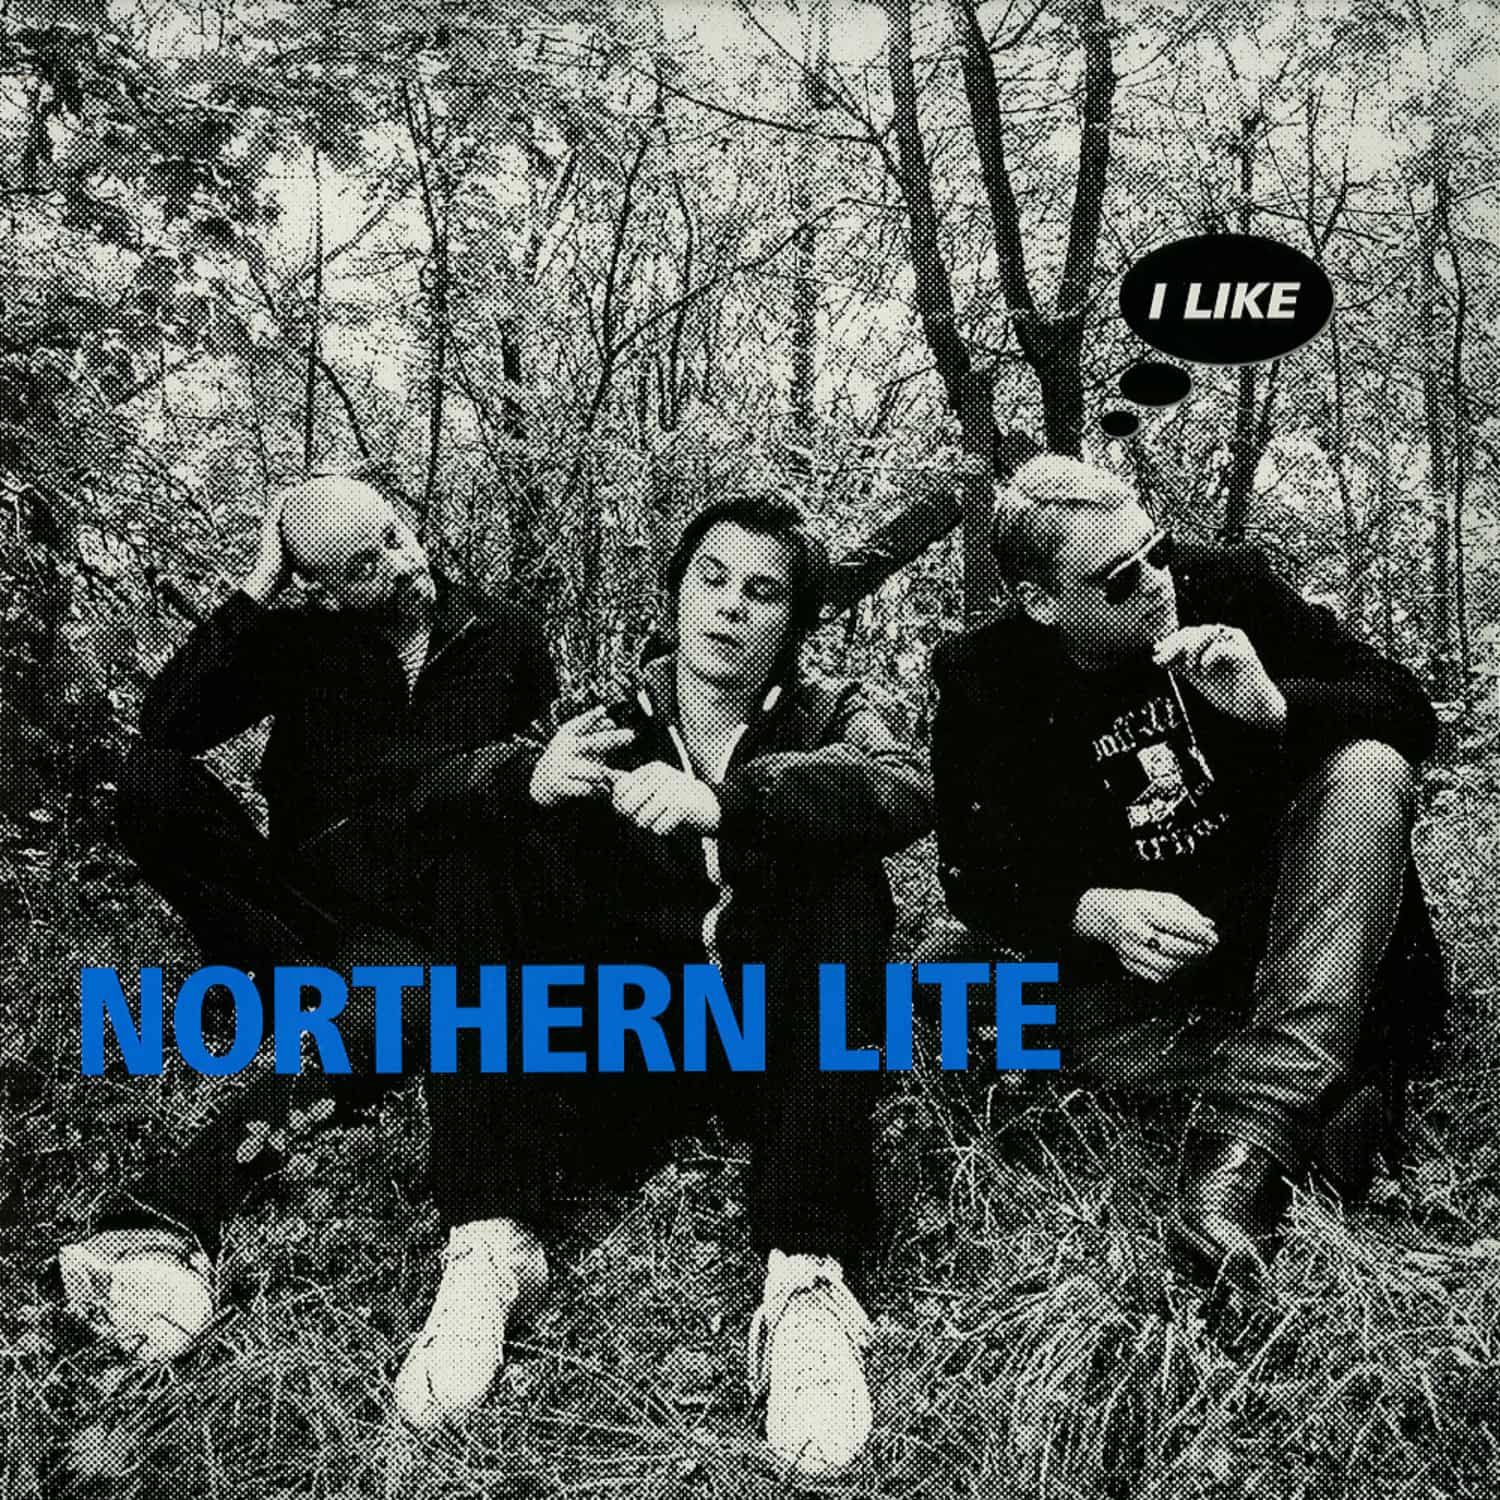 Northern Lite - I LIKE 